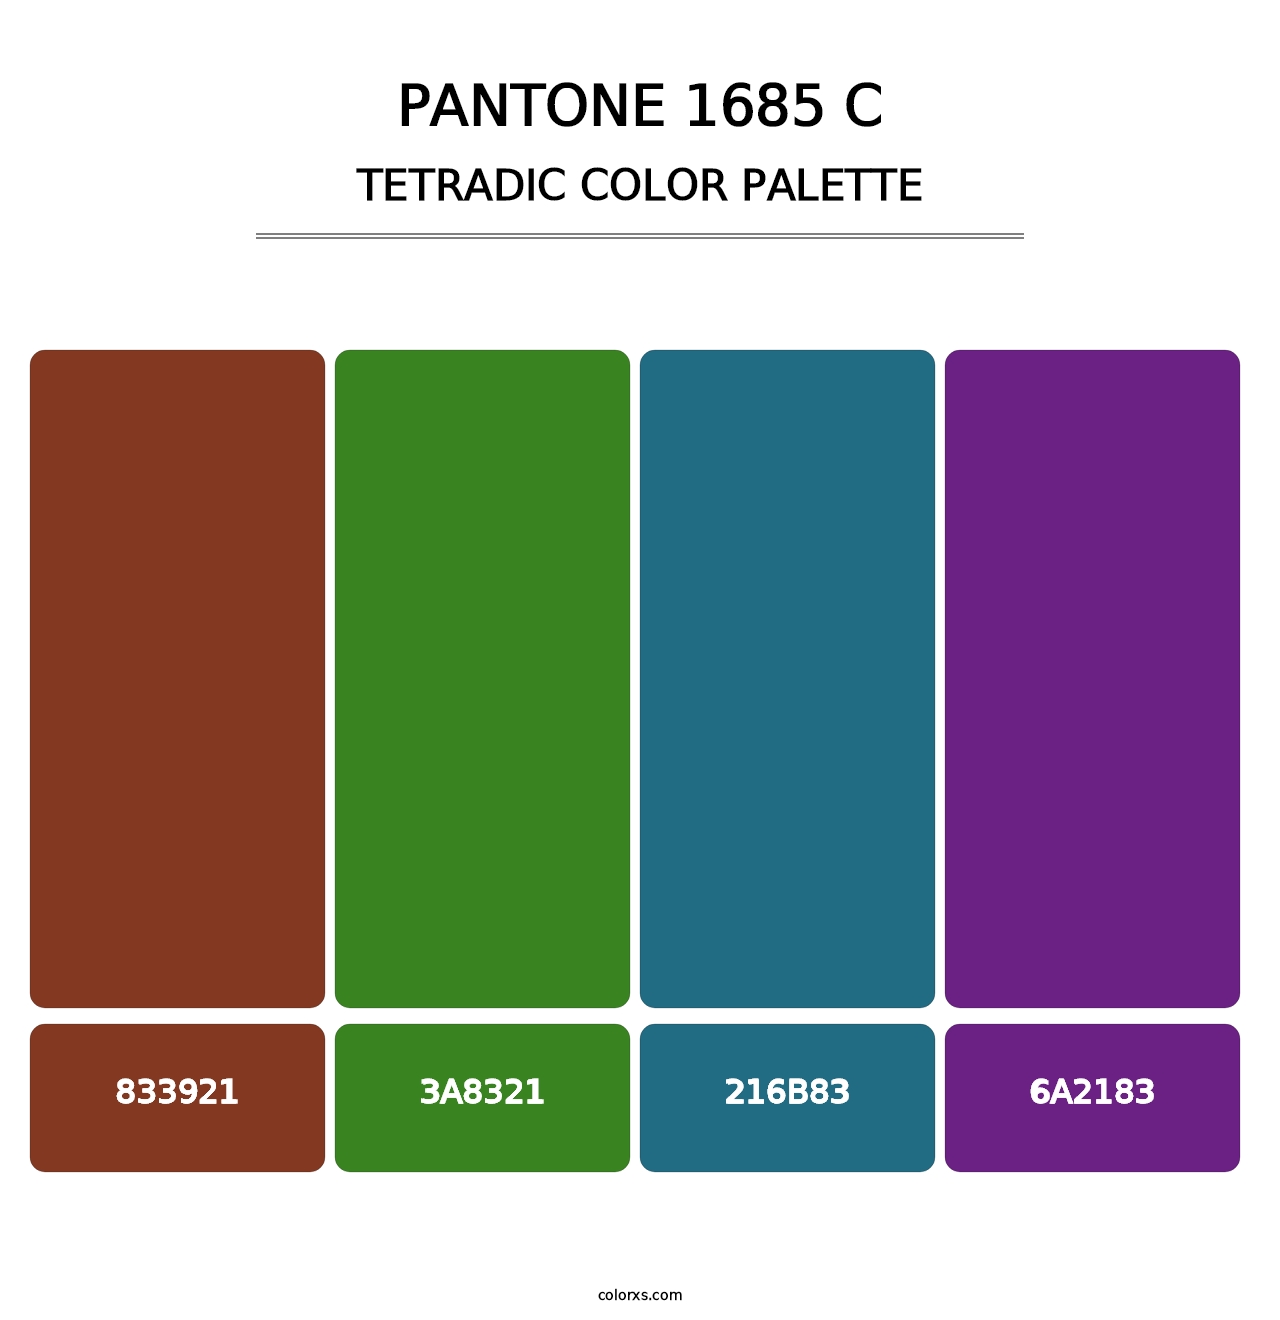 PANTONE 1685 C - Tetradic Color Palette